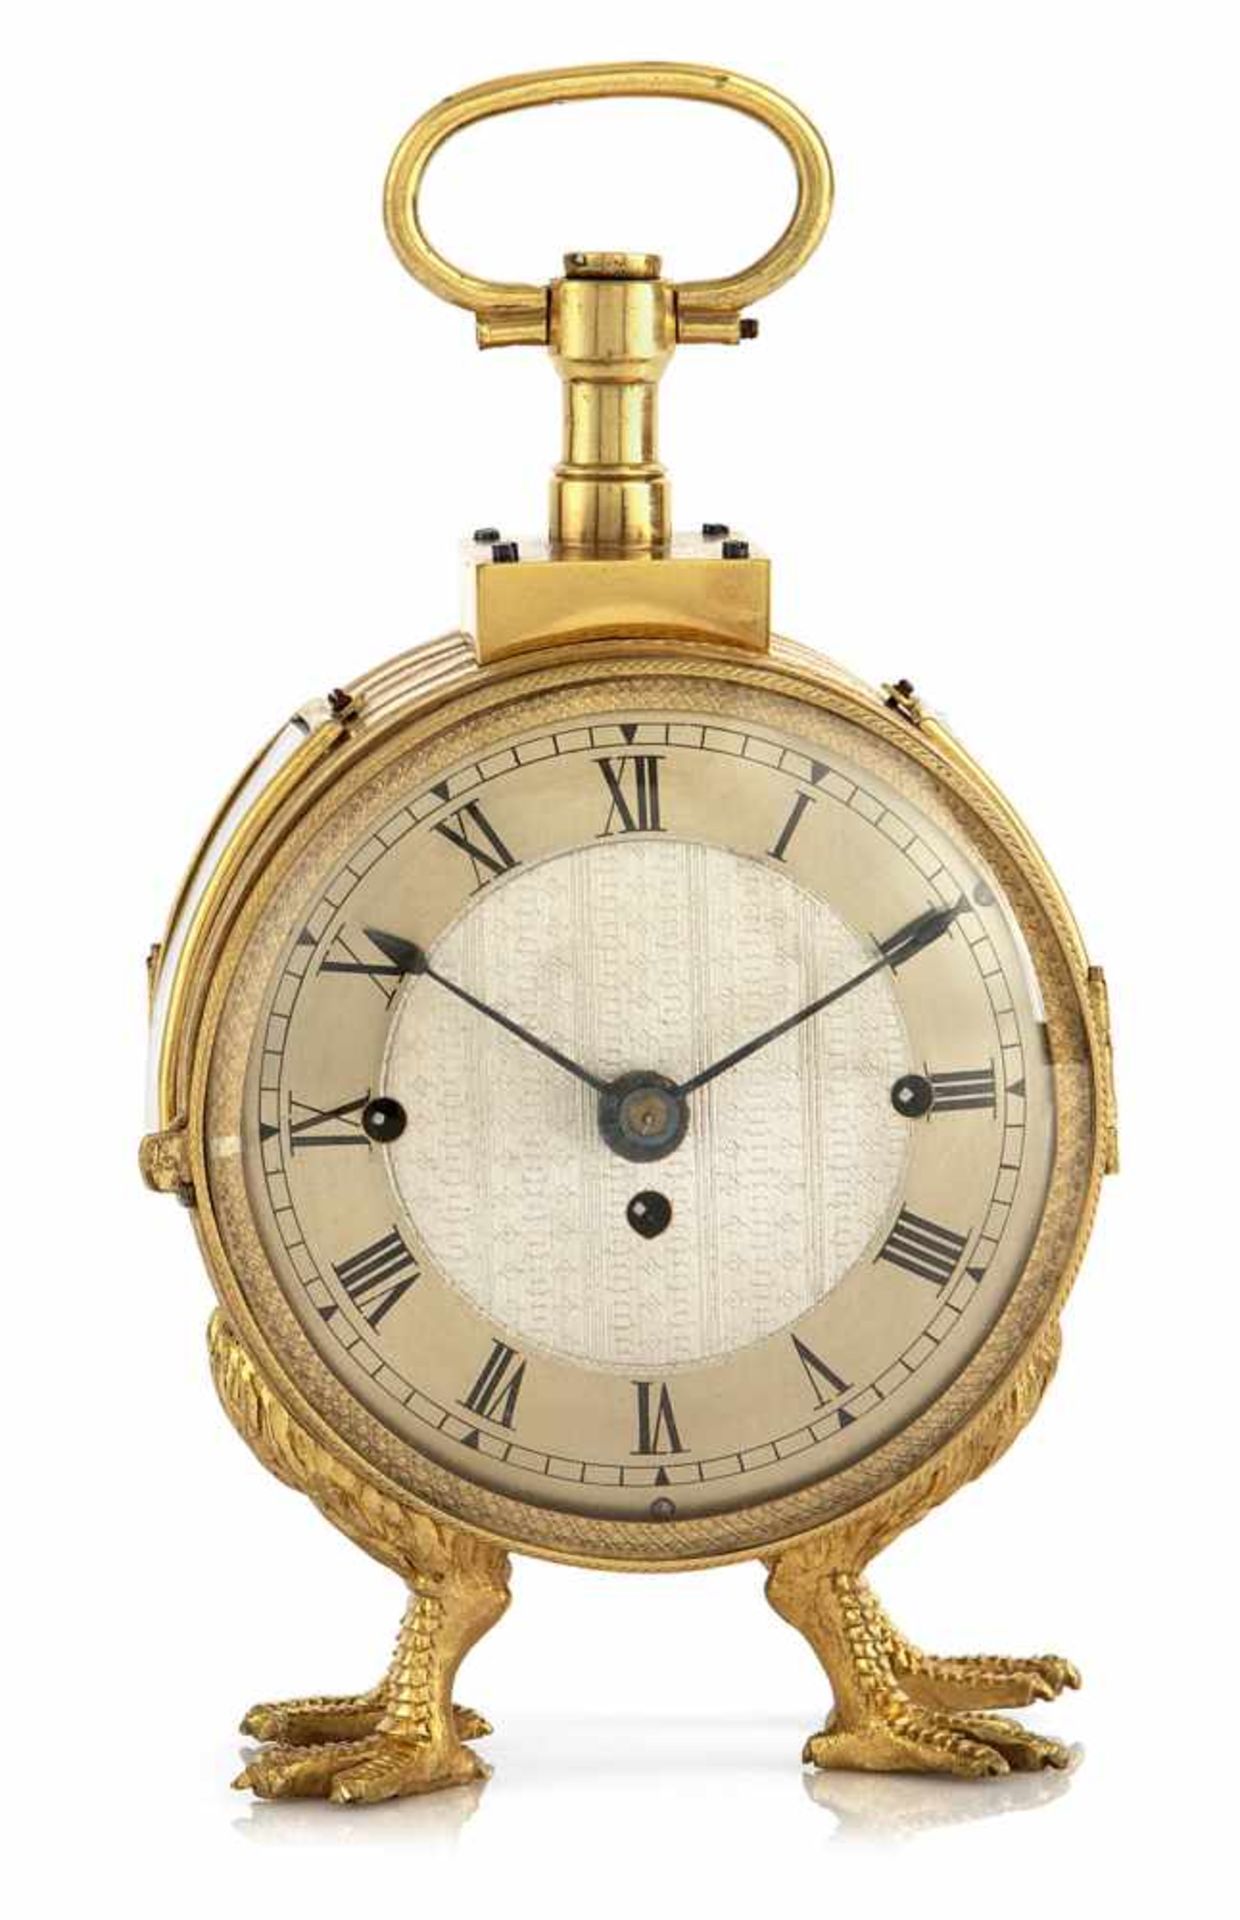 A fine ormolu carriage clock, Vienna, c. 1830. Round glazed case on claw feet. Silvered dial with